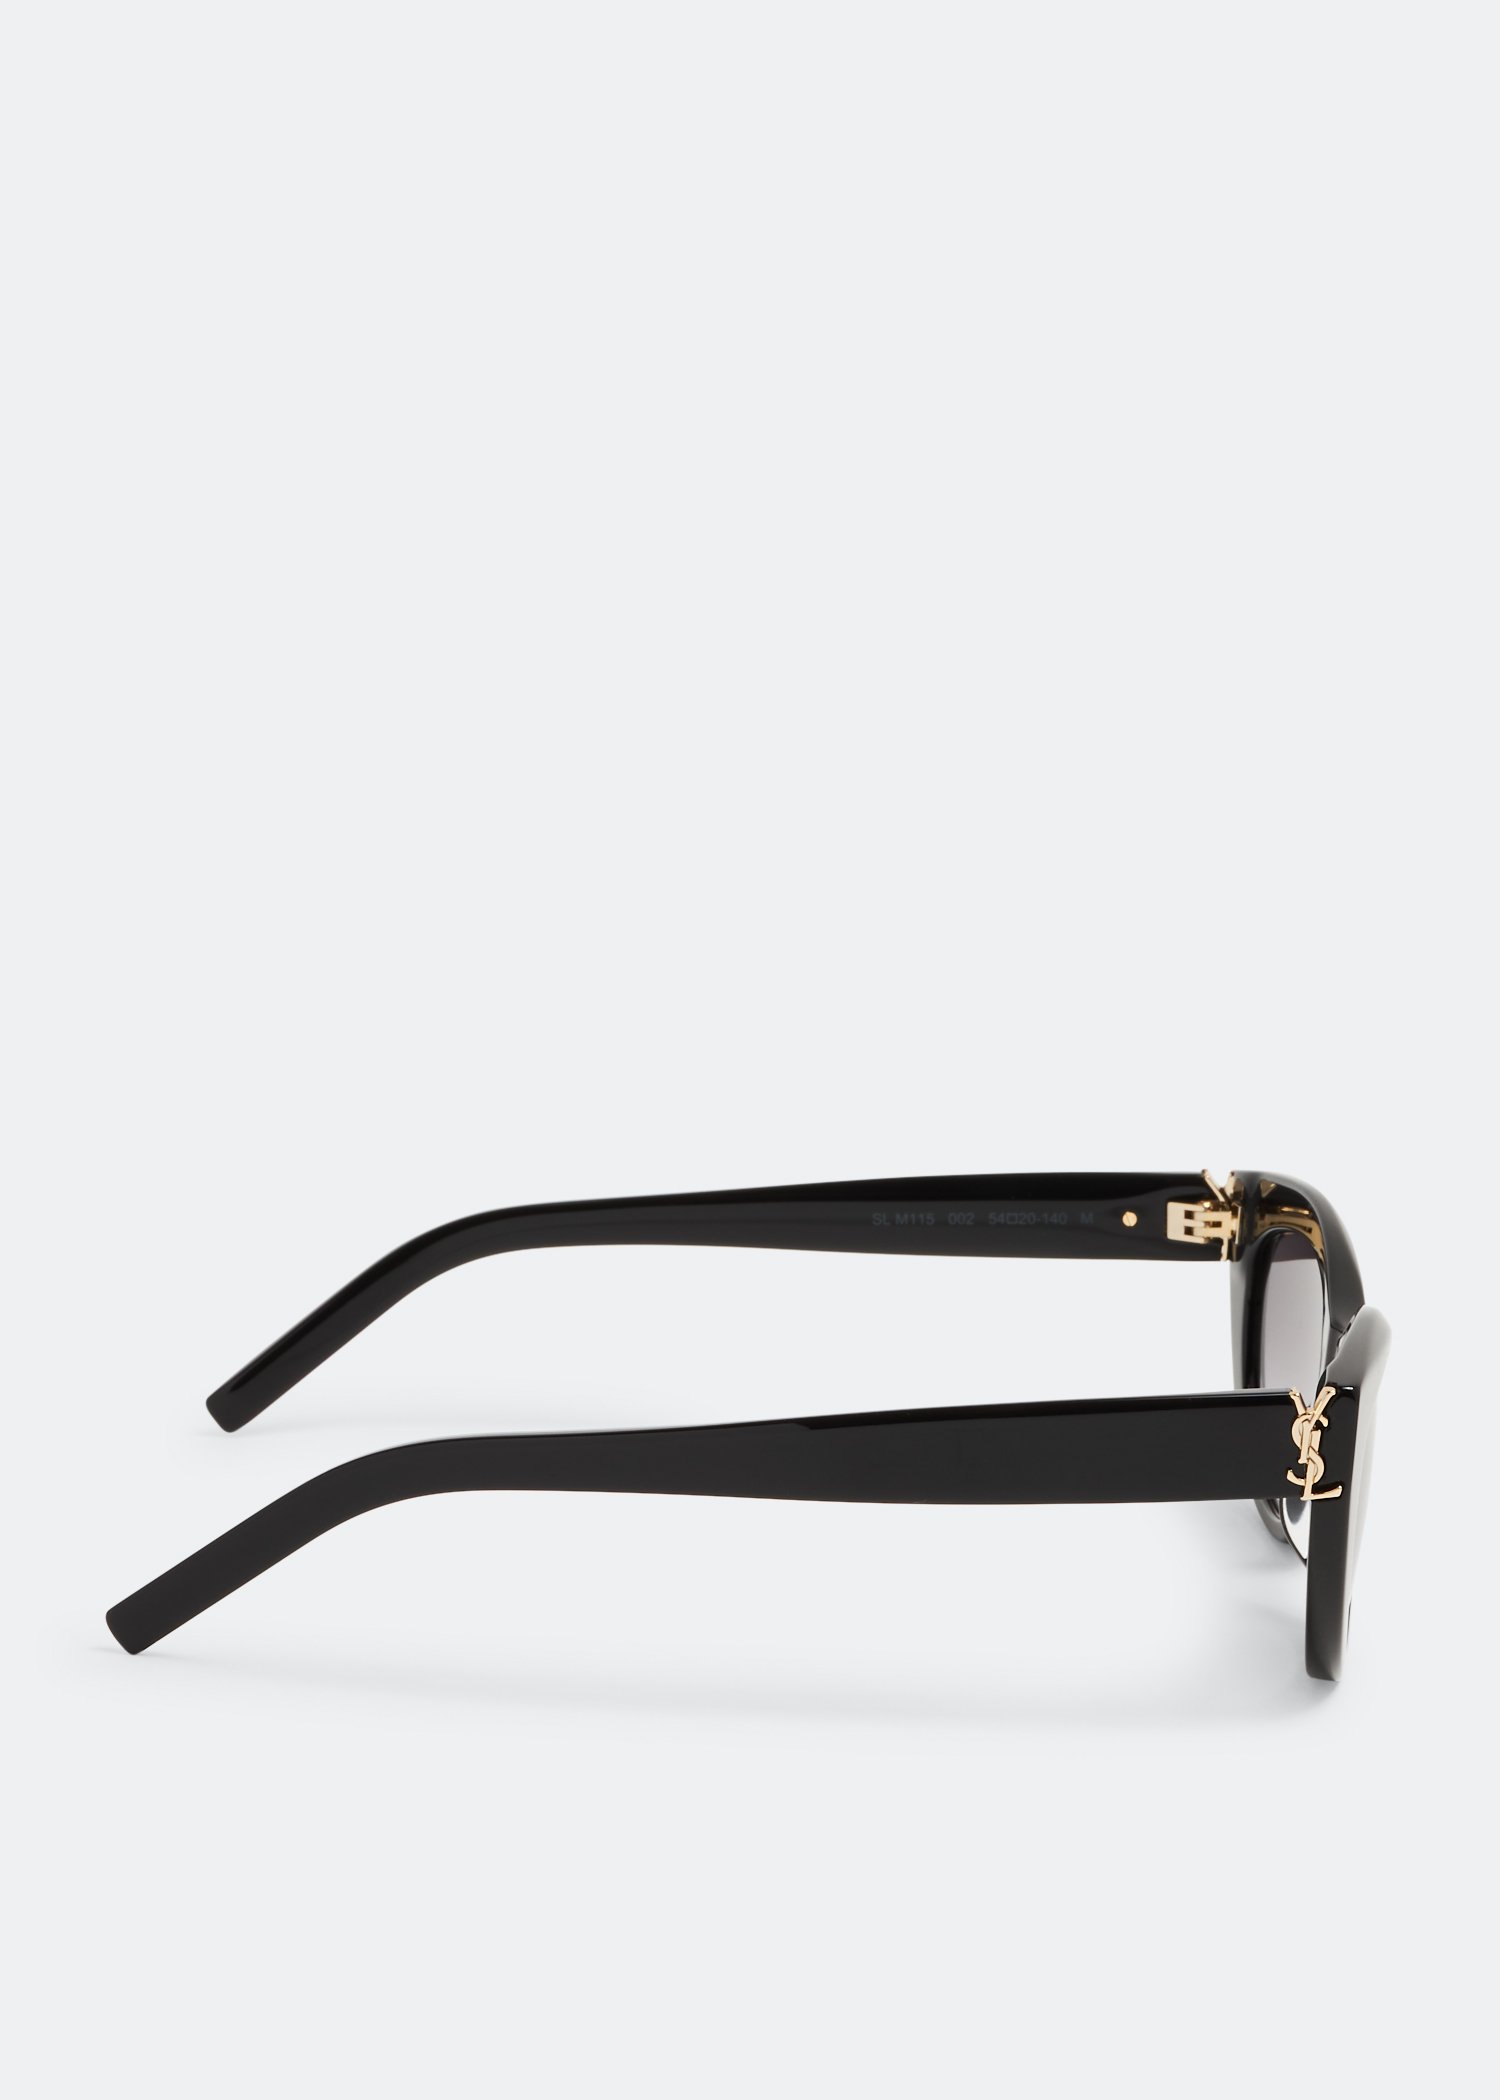 Saint Laurent Monogram Sunglasses 54mm Black Frame and Grey Gradient Lenses  - SL M115 002